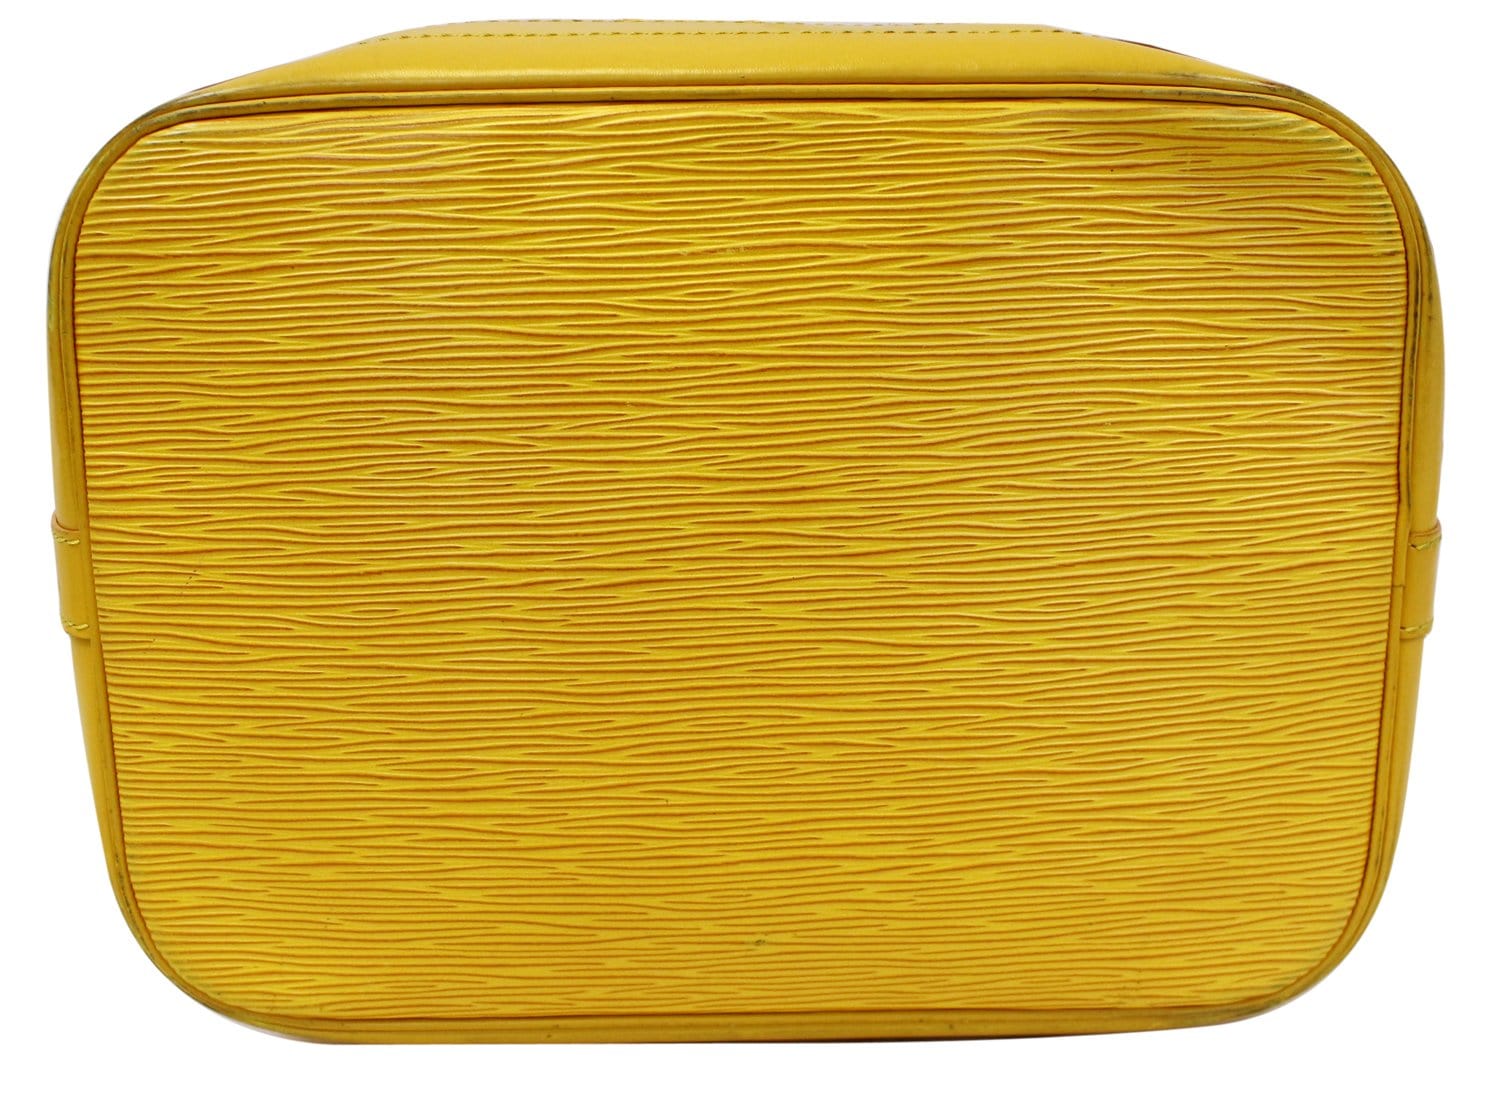 LOUIS VUITTON Shoulder Bag M44009 Noe Epi Leather yellow yellow Women –